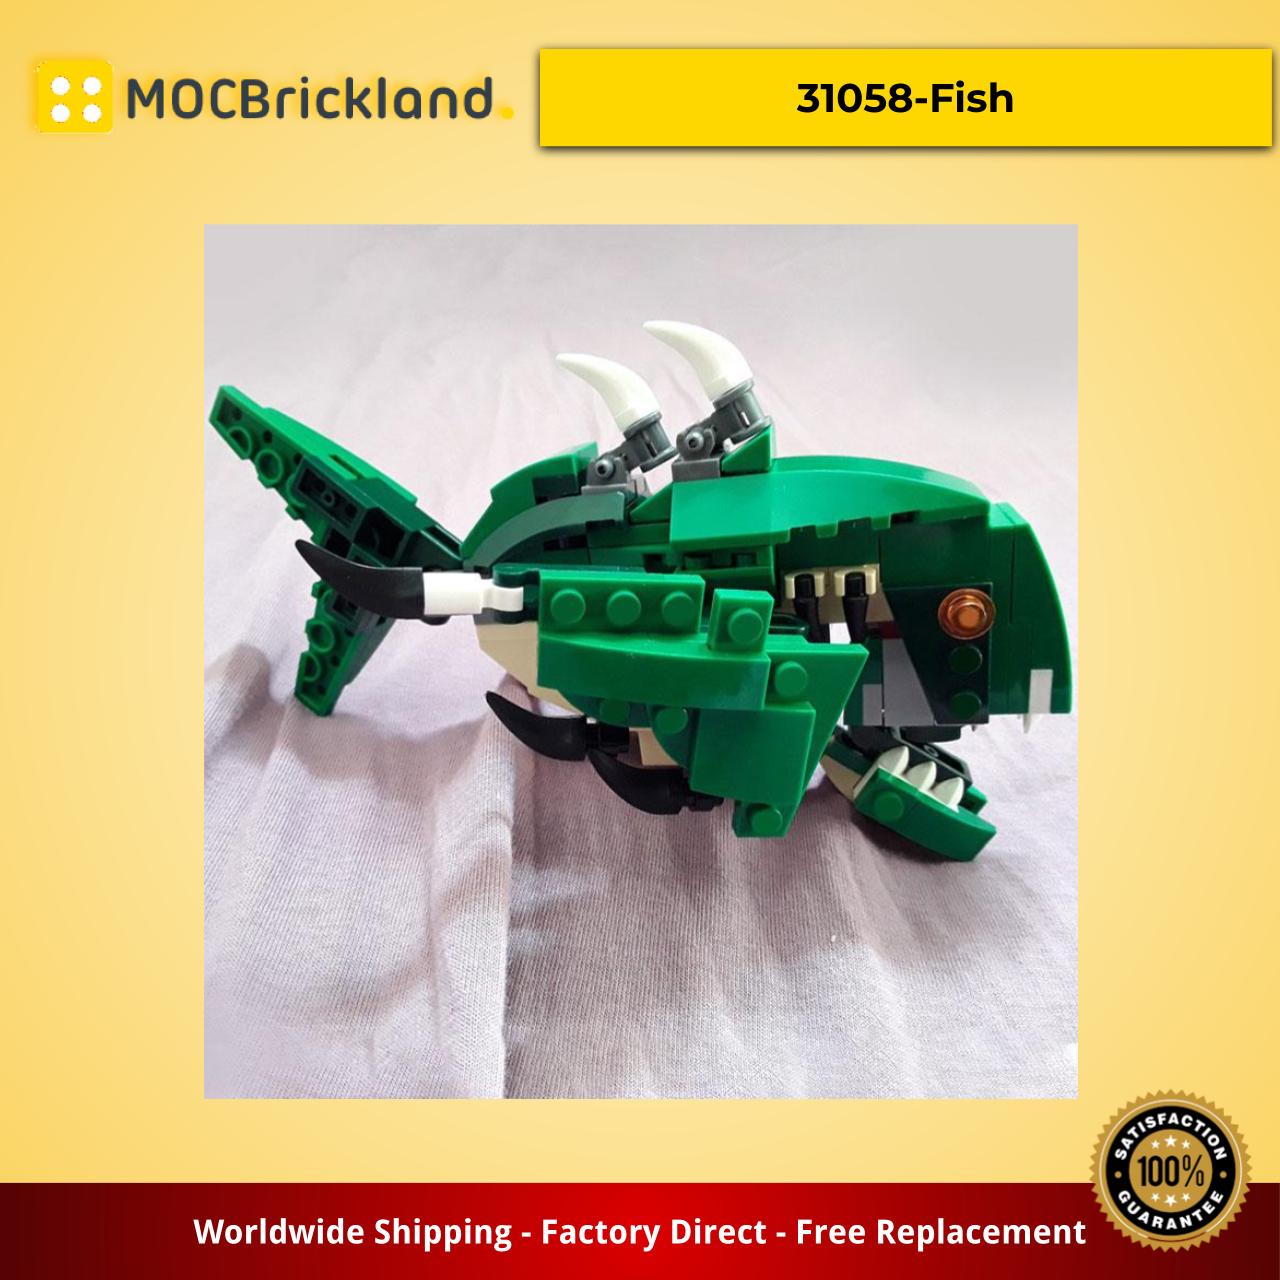 MOCBRICKLAND MOC-27636 31058-Fish